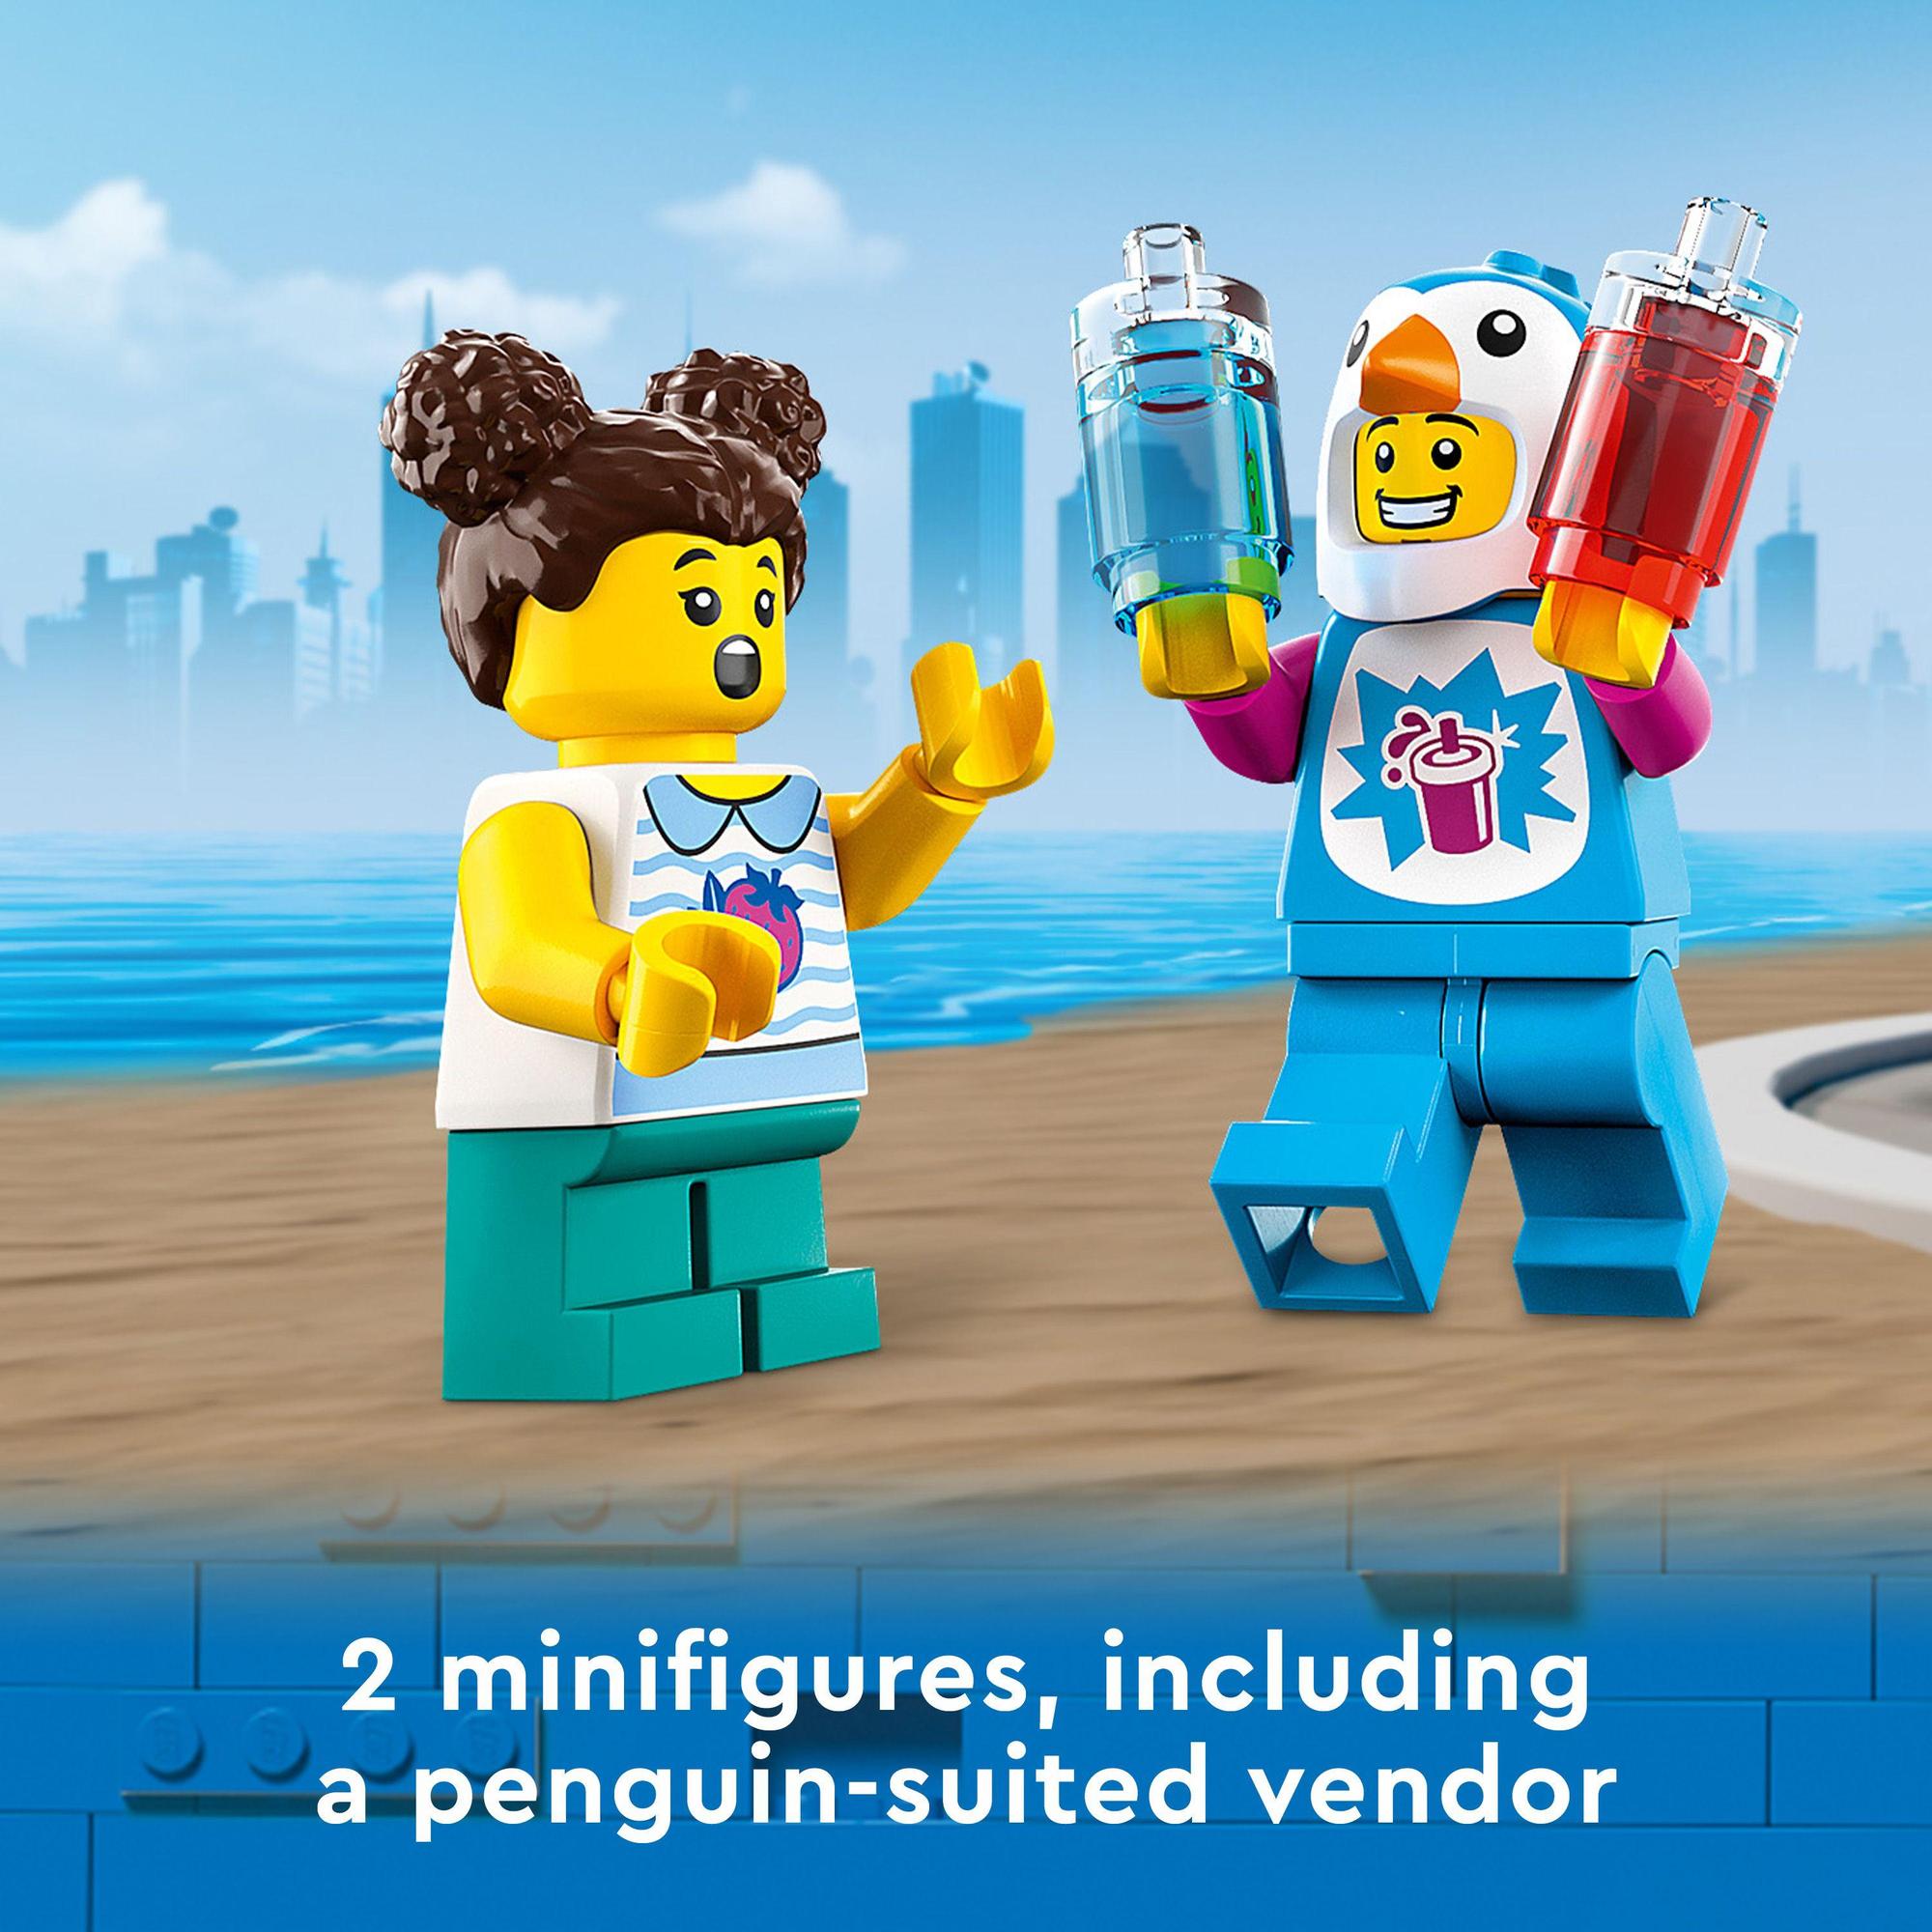 LEGO City 60384 Xe Kem Tuyết Của Penguin (194 Chi Tiết)